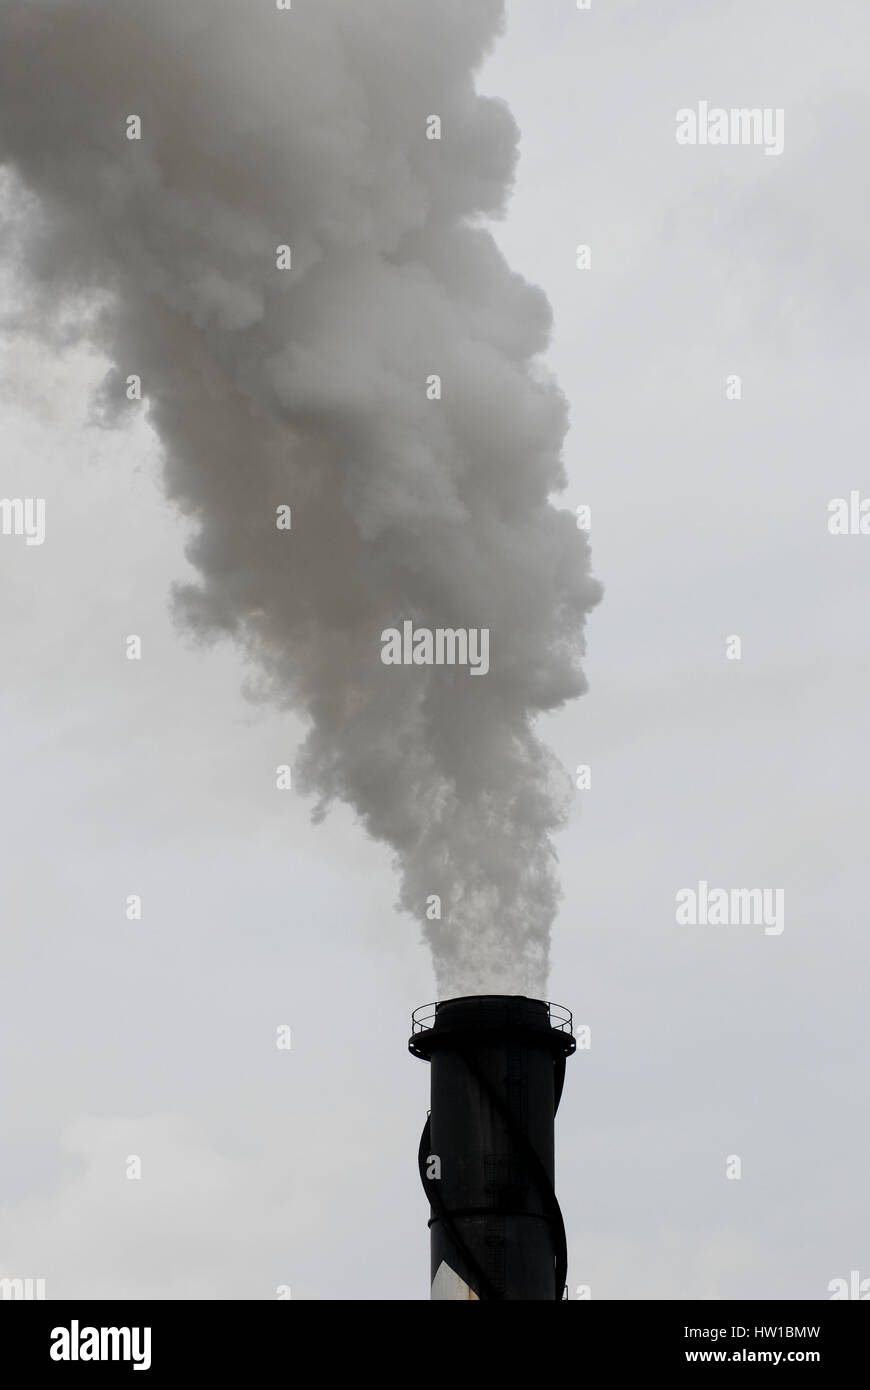 Fumar chimenea industrial, rauchender Industriekamin Foto de stock